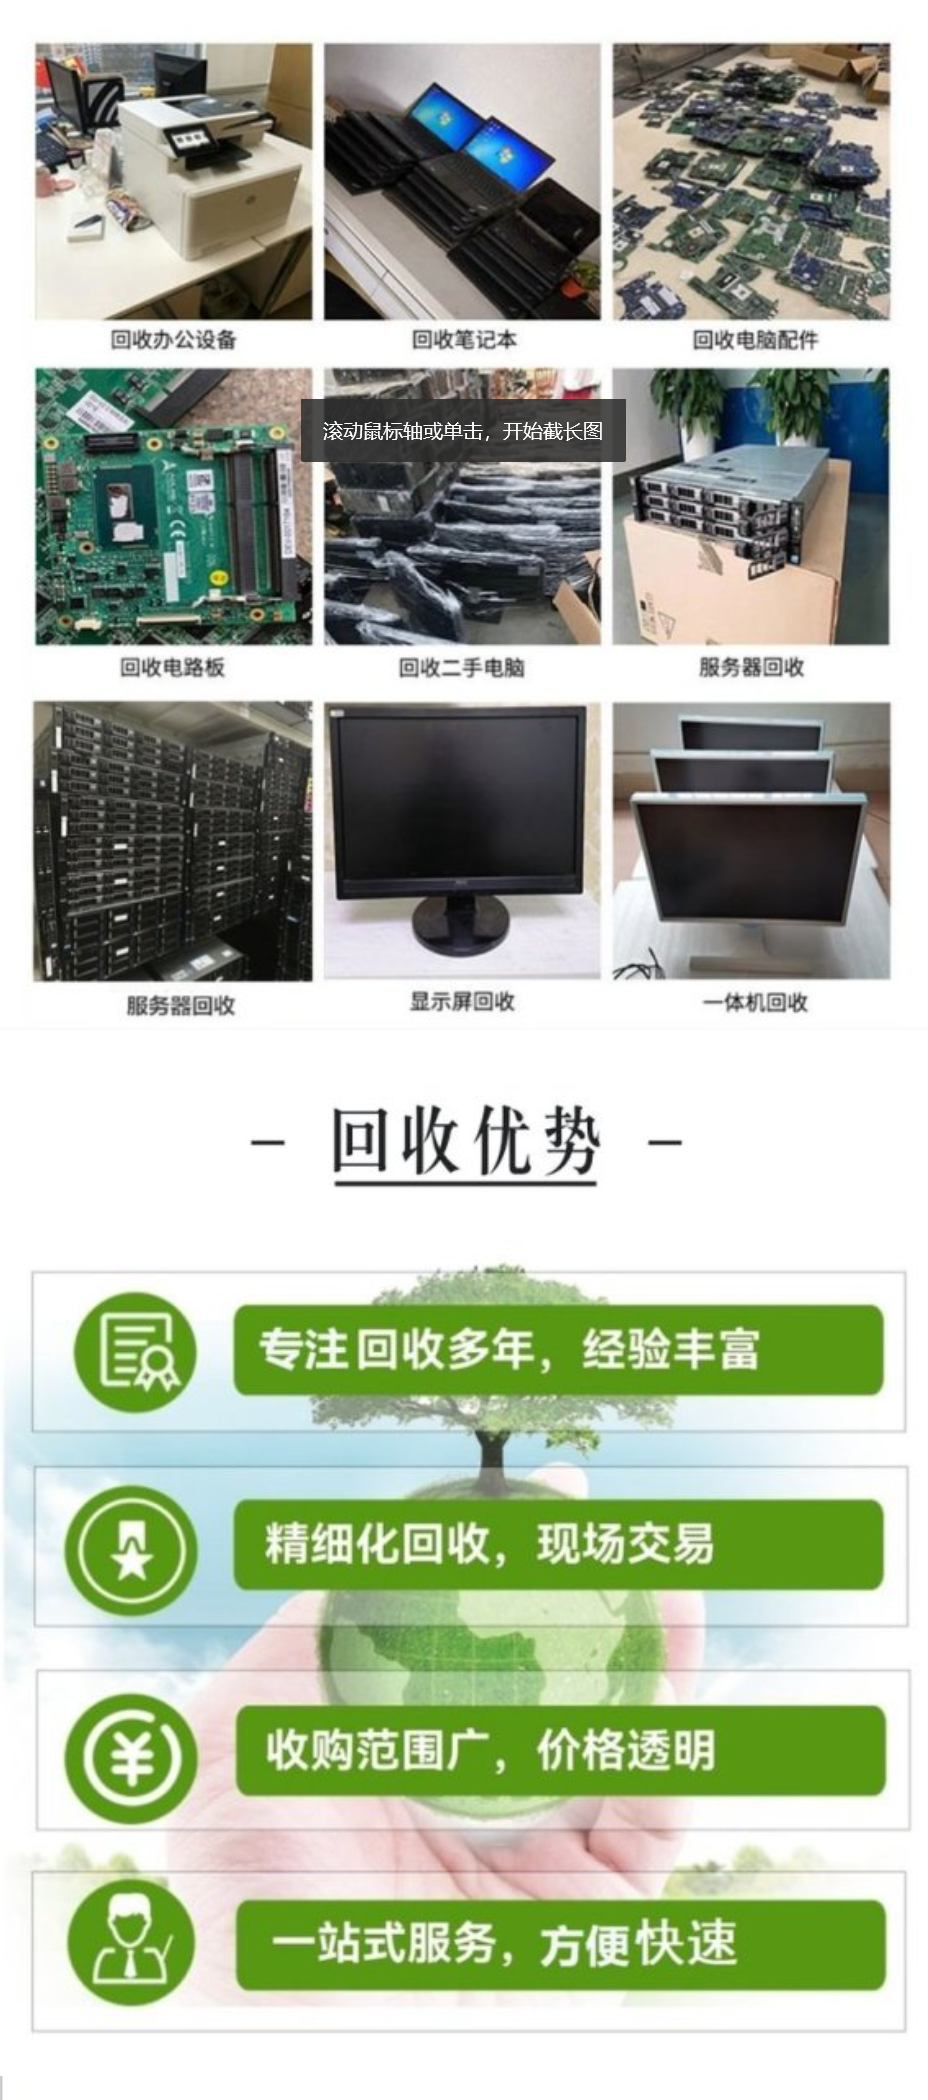 School computer recycling and training unit laptop rental all-in-one machine for door-to-door sales